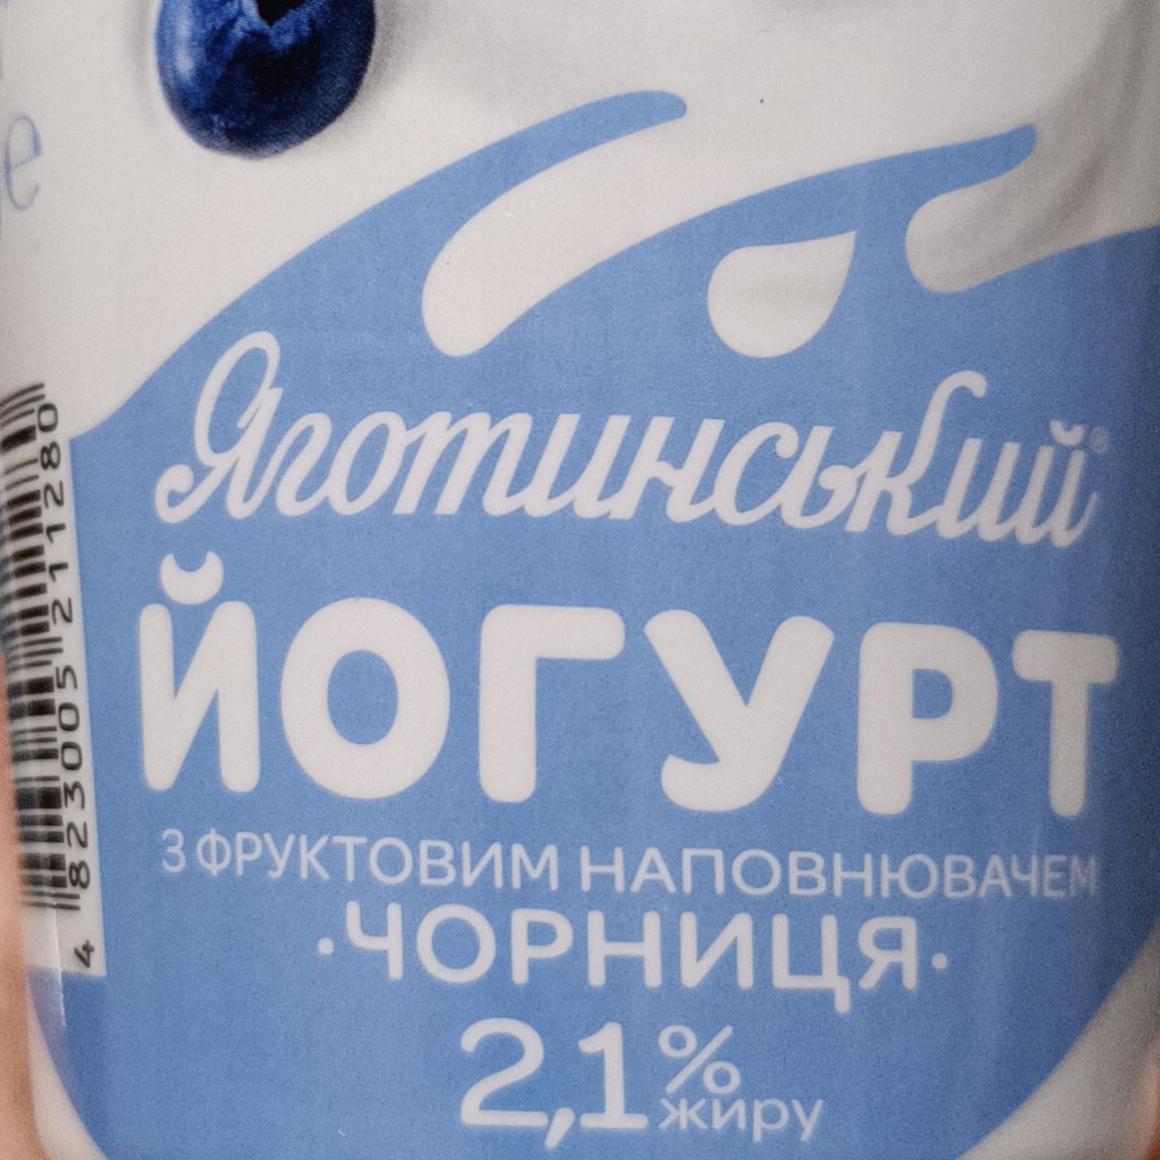 Фото - Йогурт 2.1% з фруктовим наповнювачем чорниця Яготинський